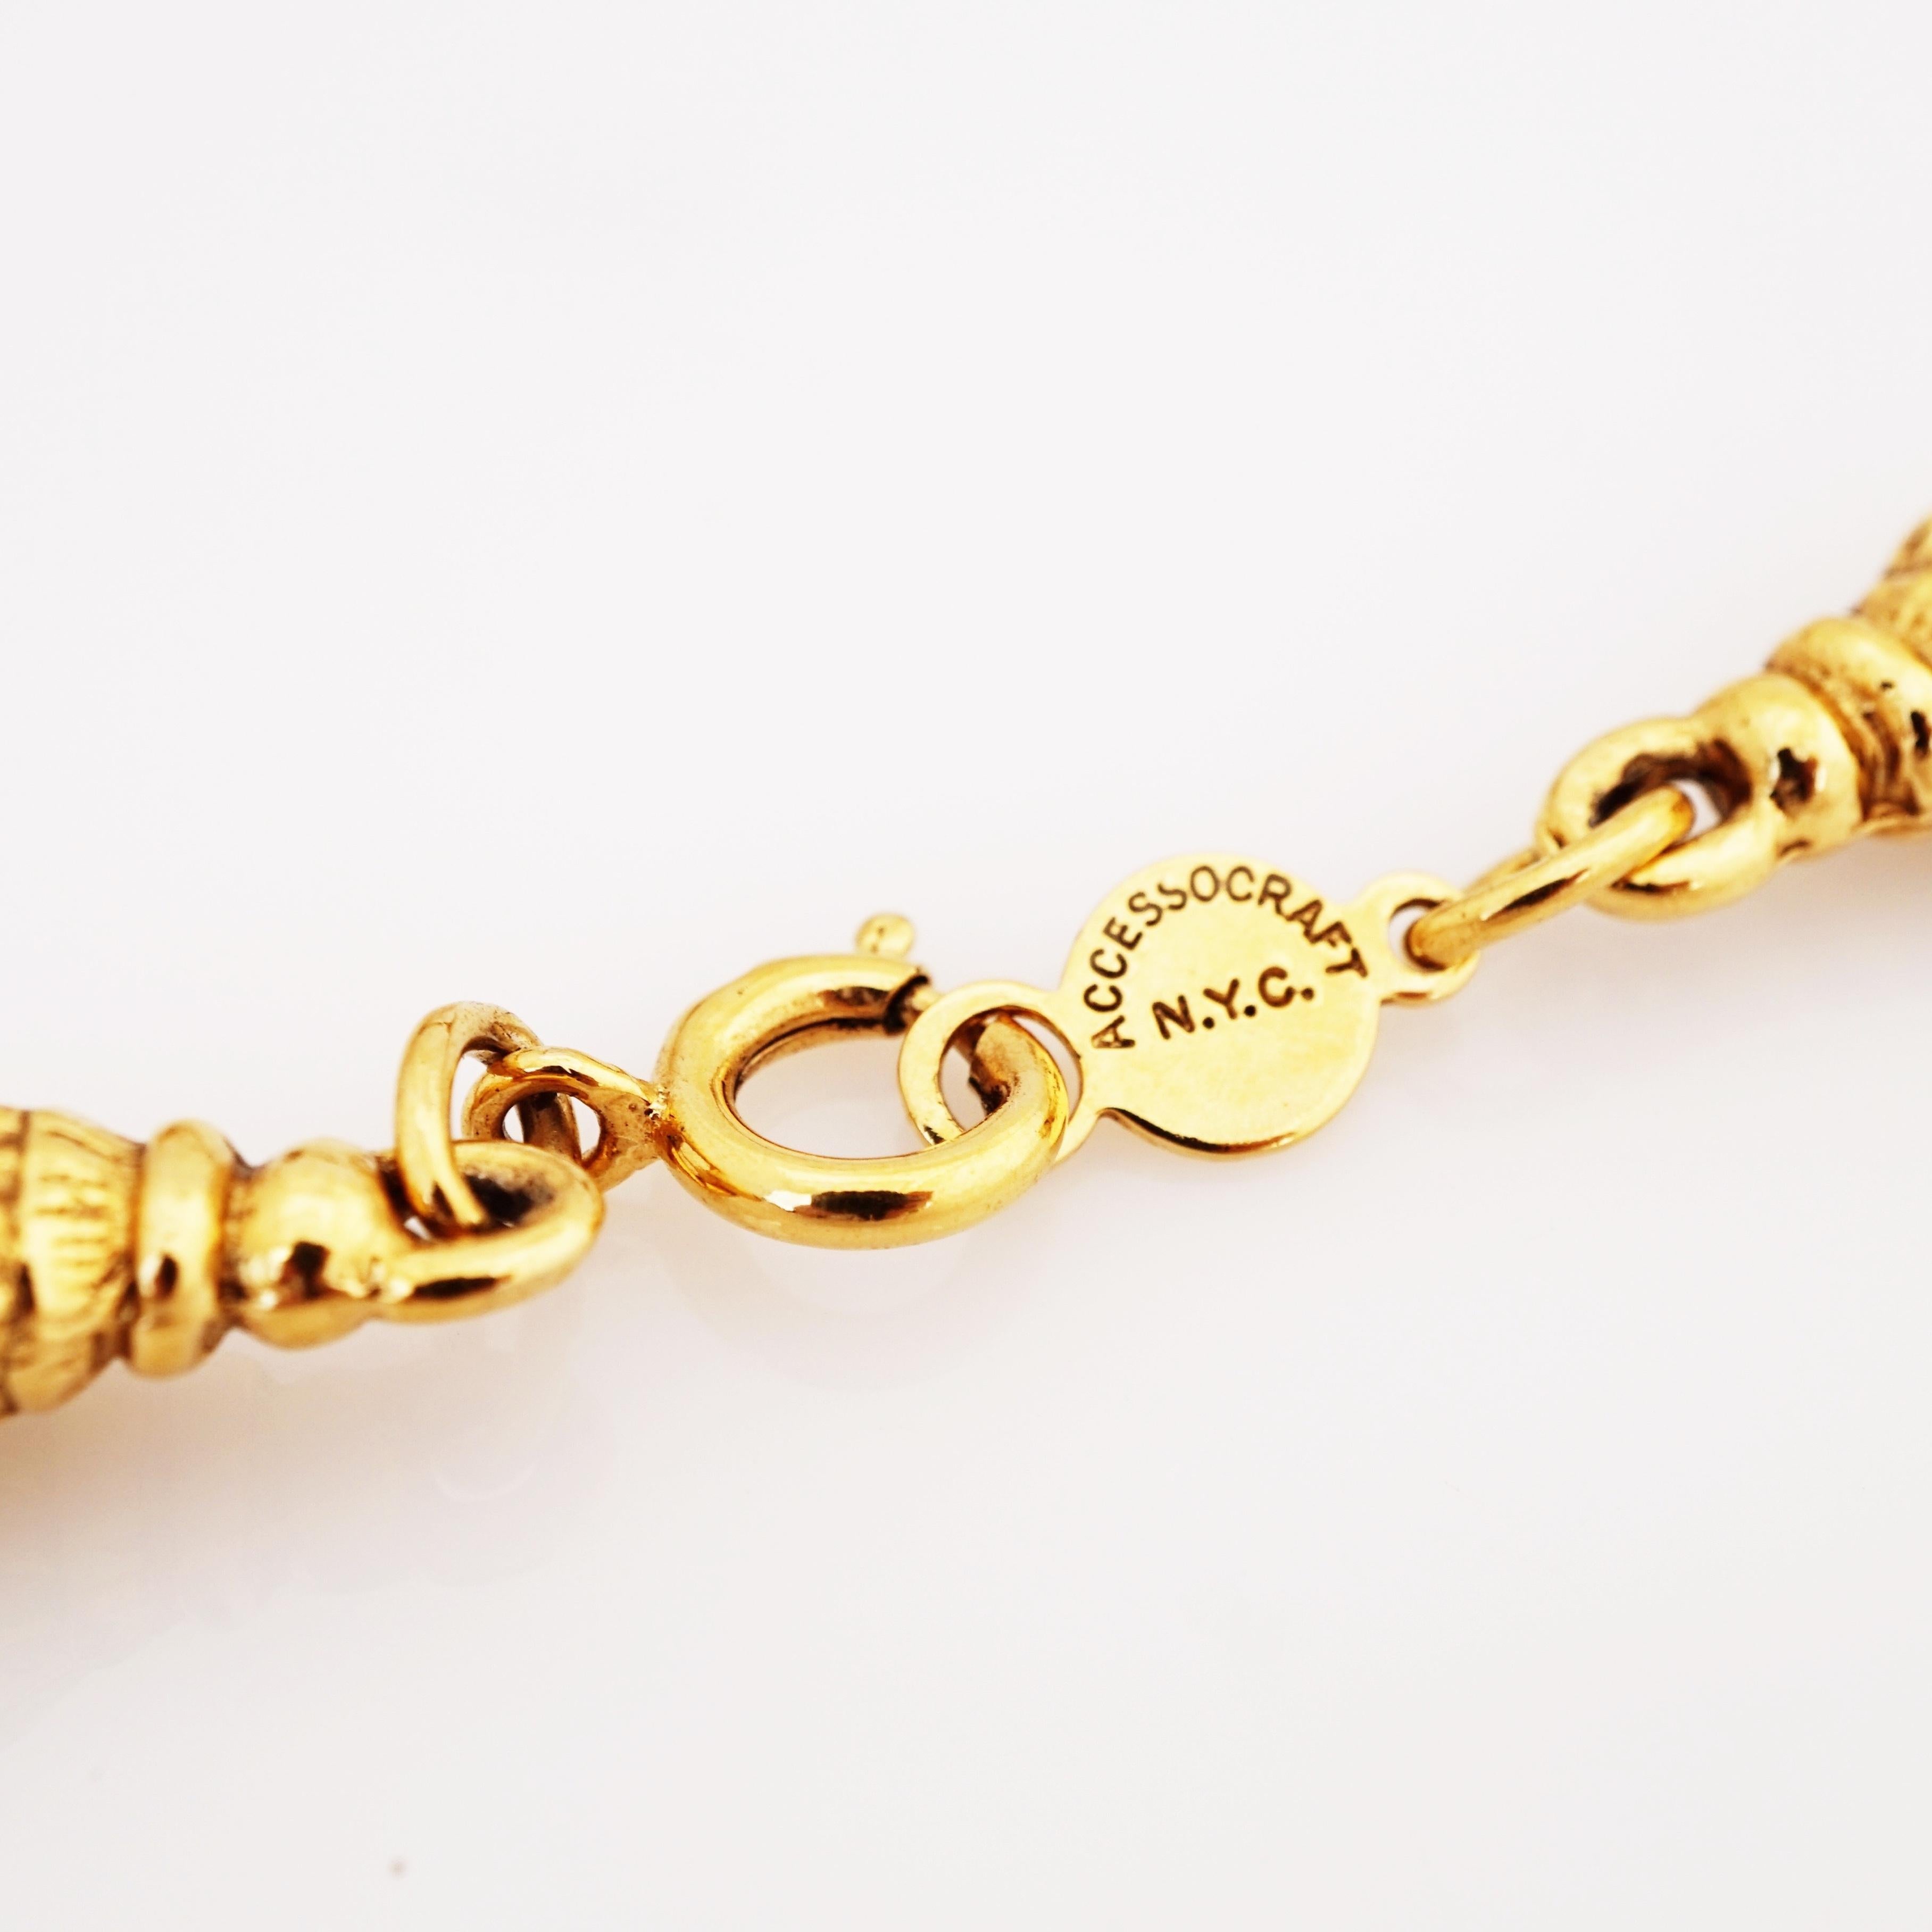 Women's Massive Runway Gold Sunburst Pendant Necklace By Accessocraft, 1960s